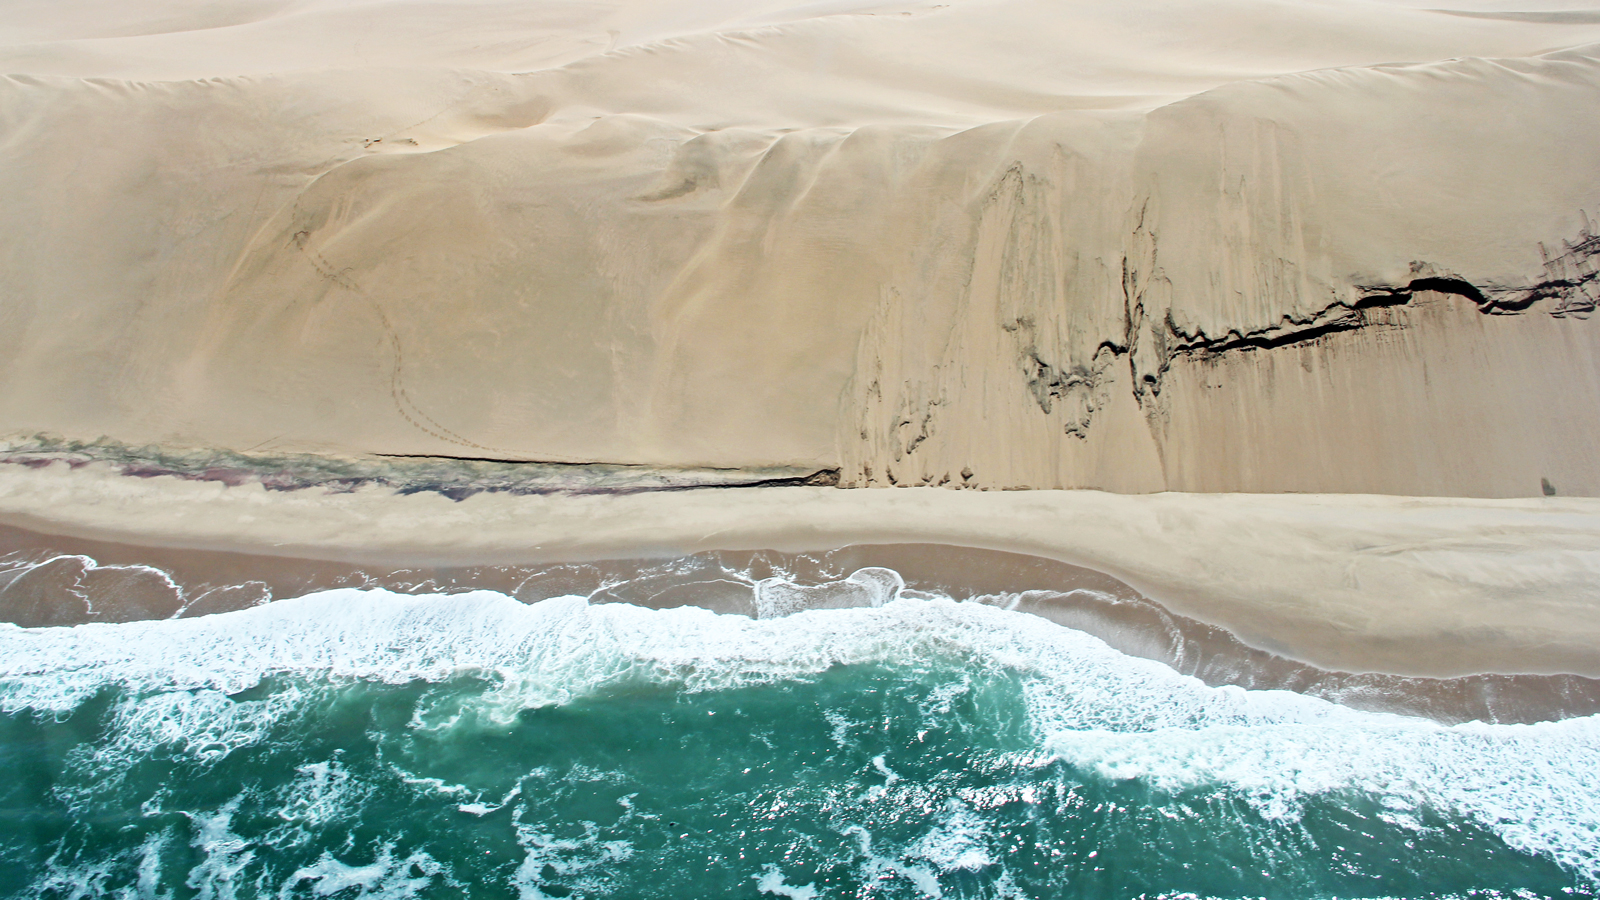 Plaje uimitoare din lume, considerate foarte periculoase. Coasta Skeleton, Namibia